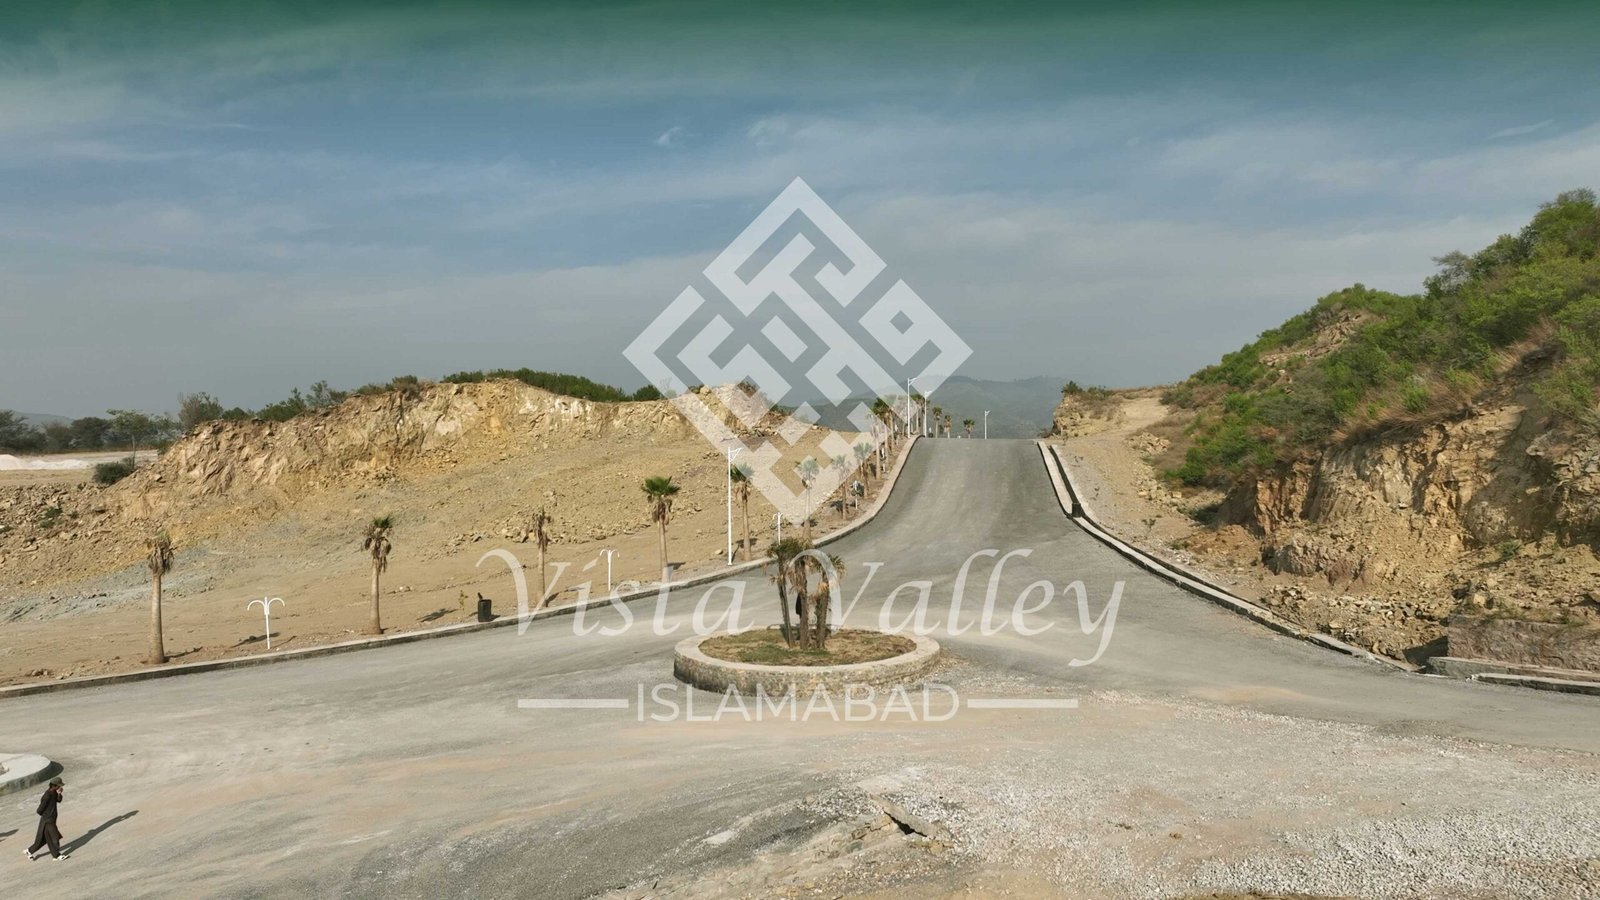 vista valley islamabad